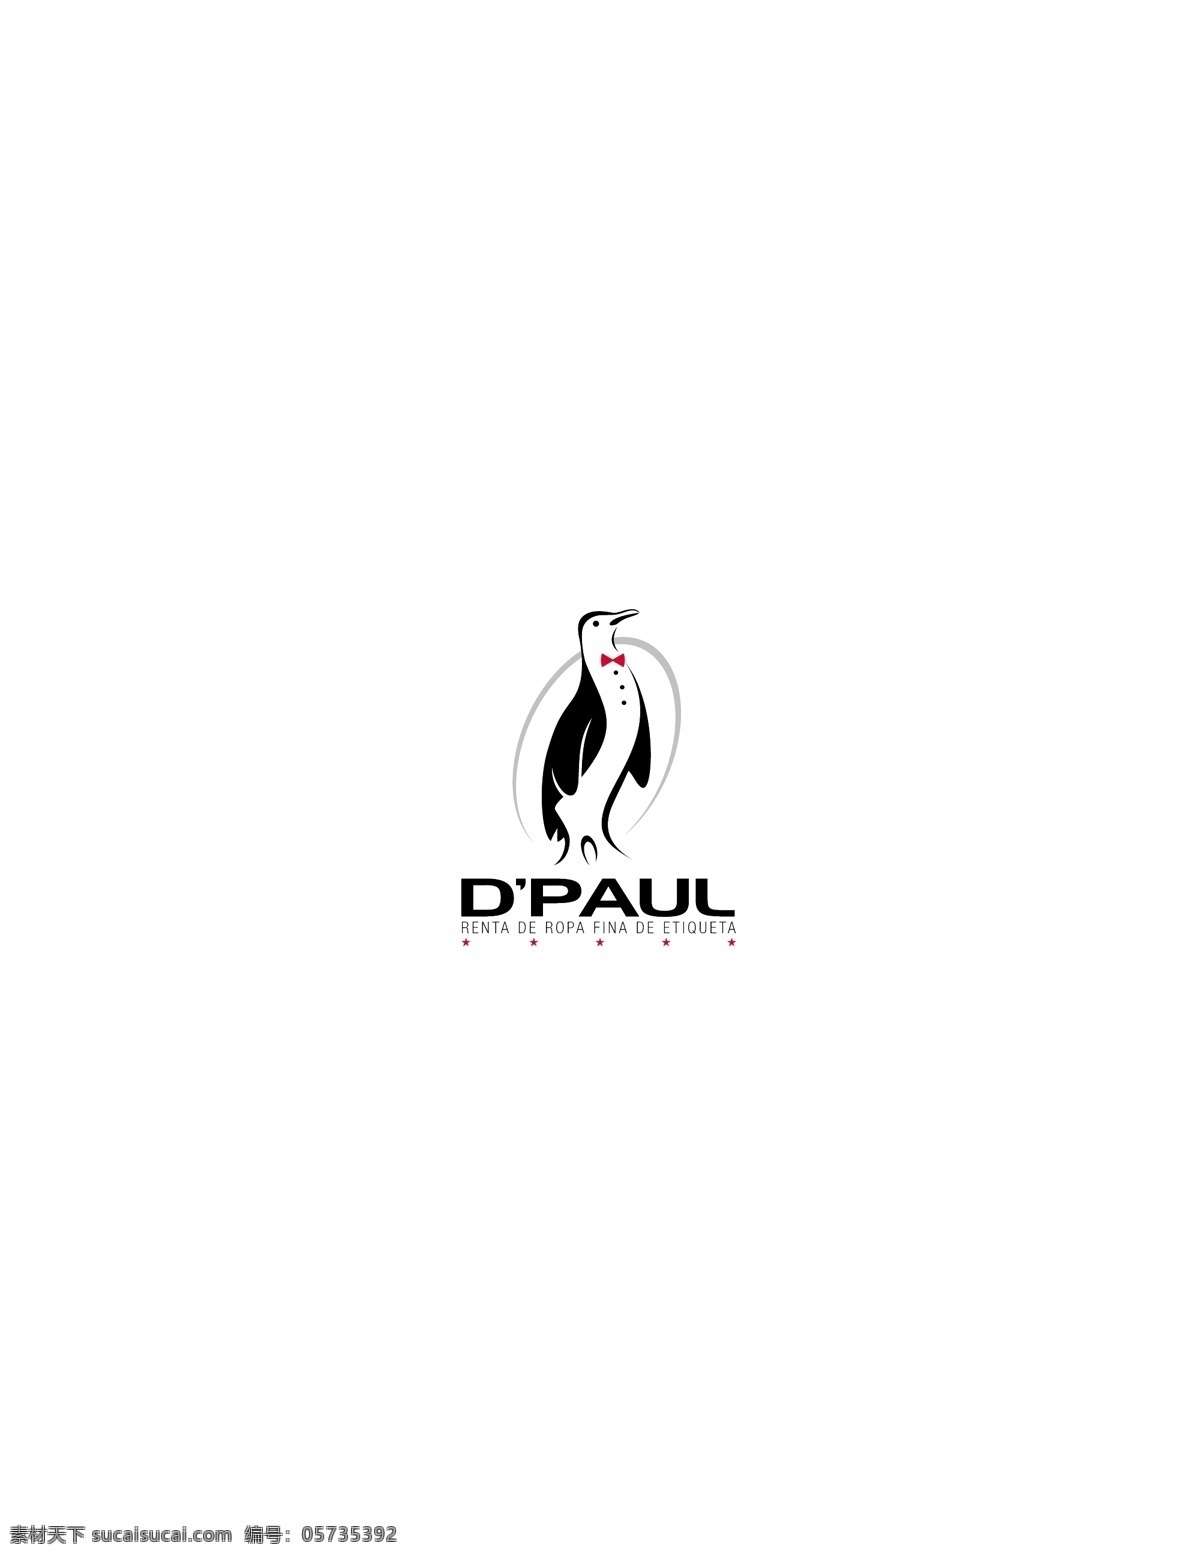 dpaul logo大全 logo 设计欣赏 商业矢量 矢量下载 服饰 品牌 标志 标志设计 欣赏 网页矢量 矢量图 其他矢量图